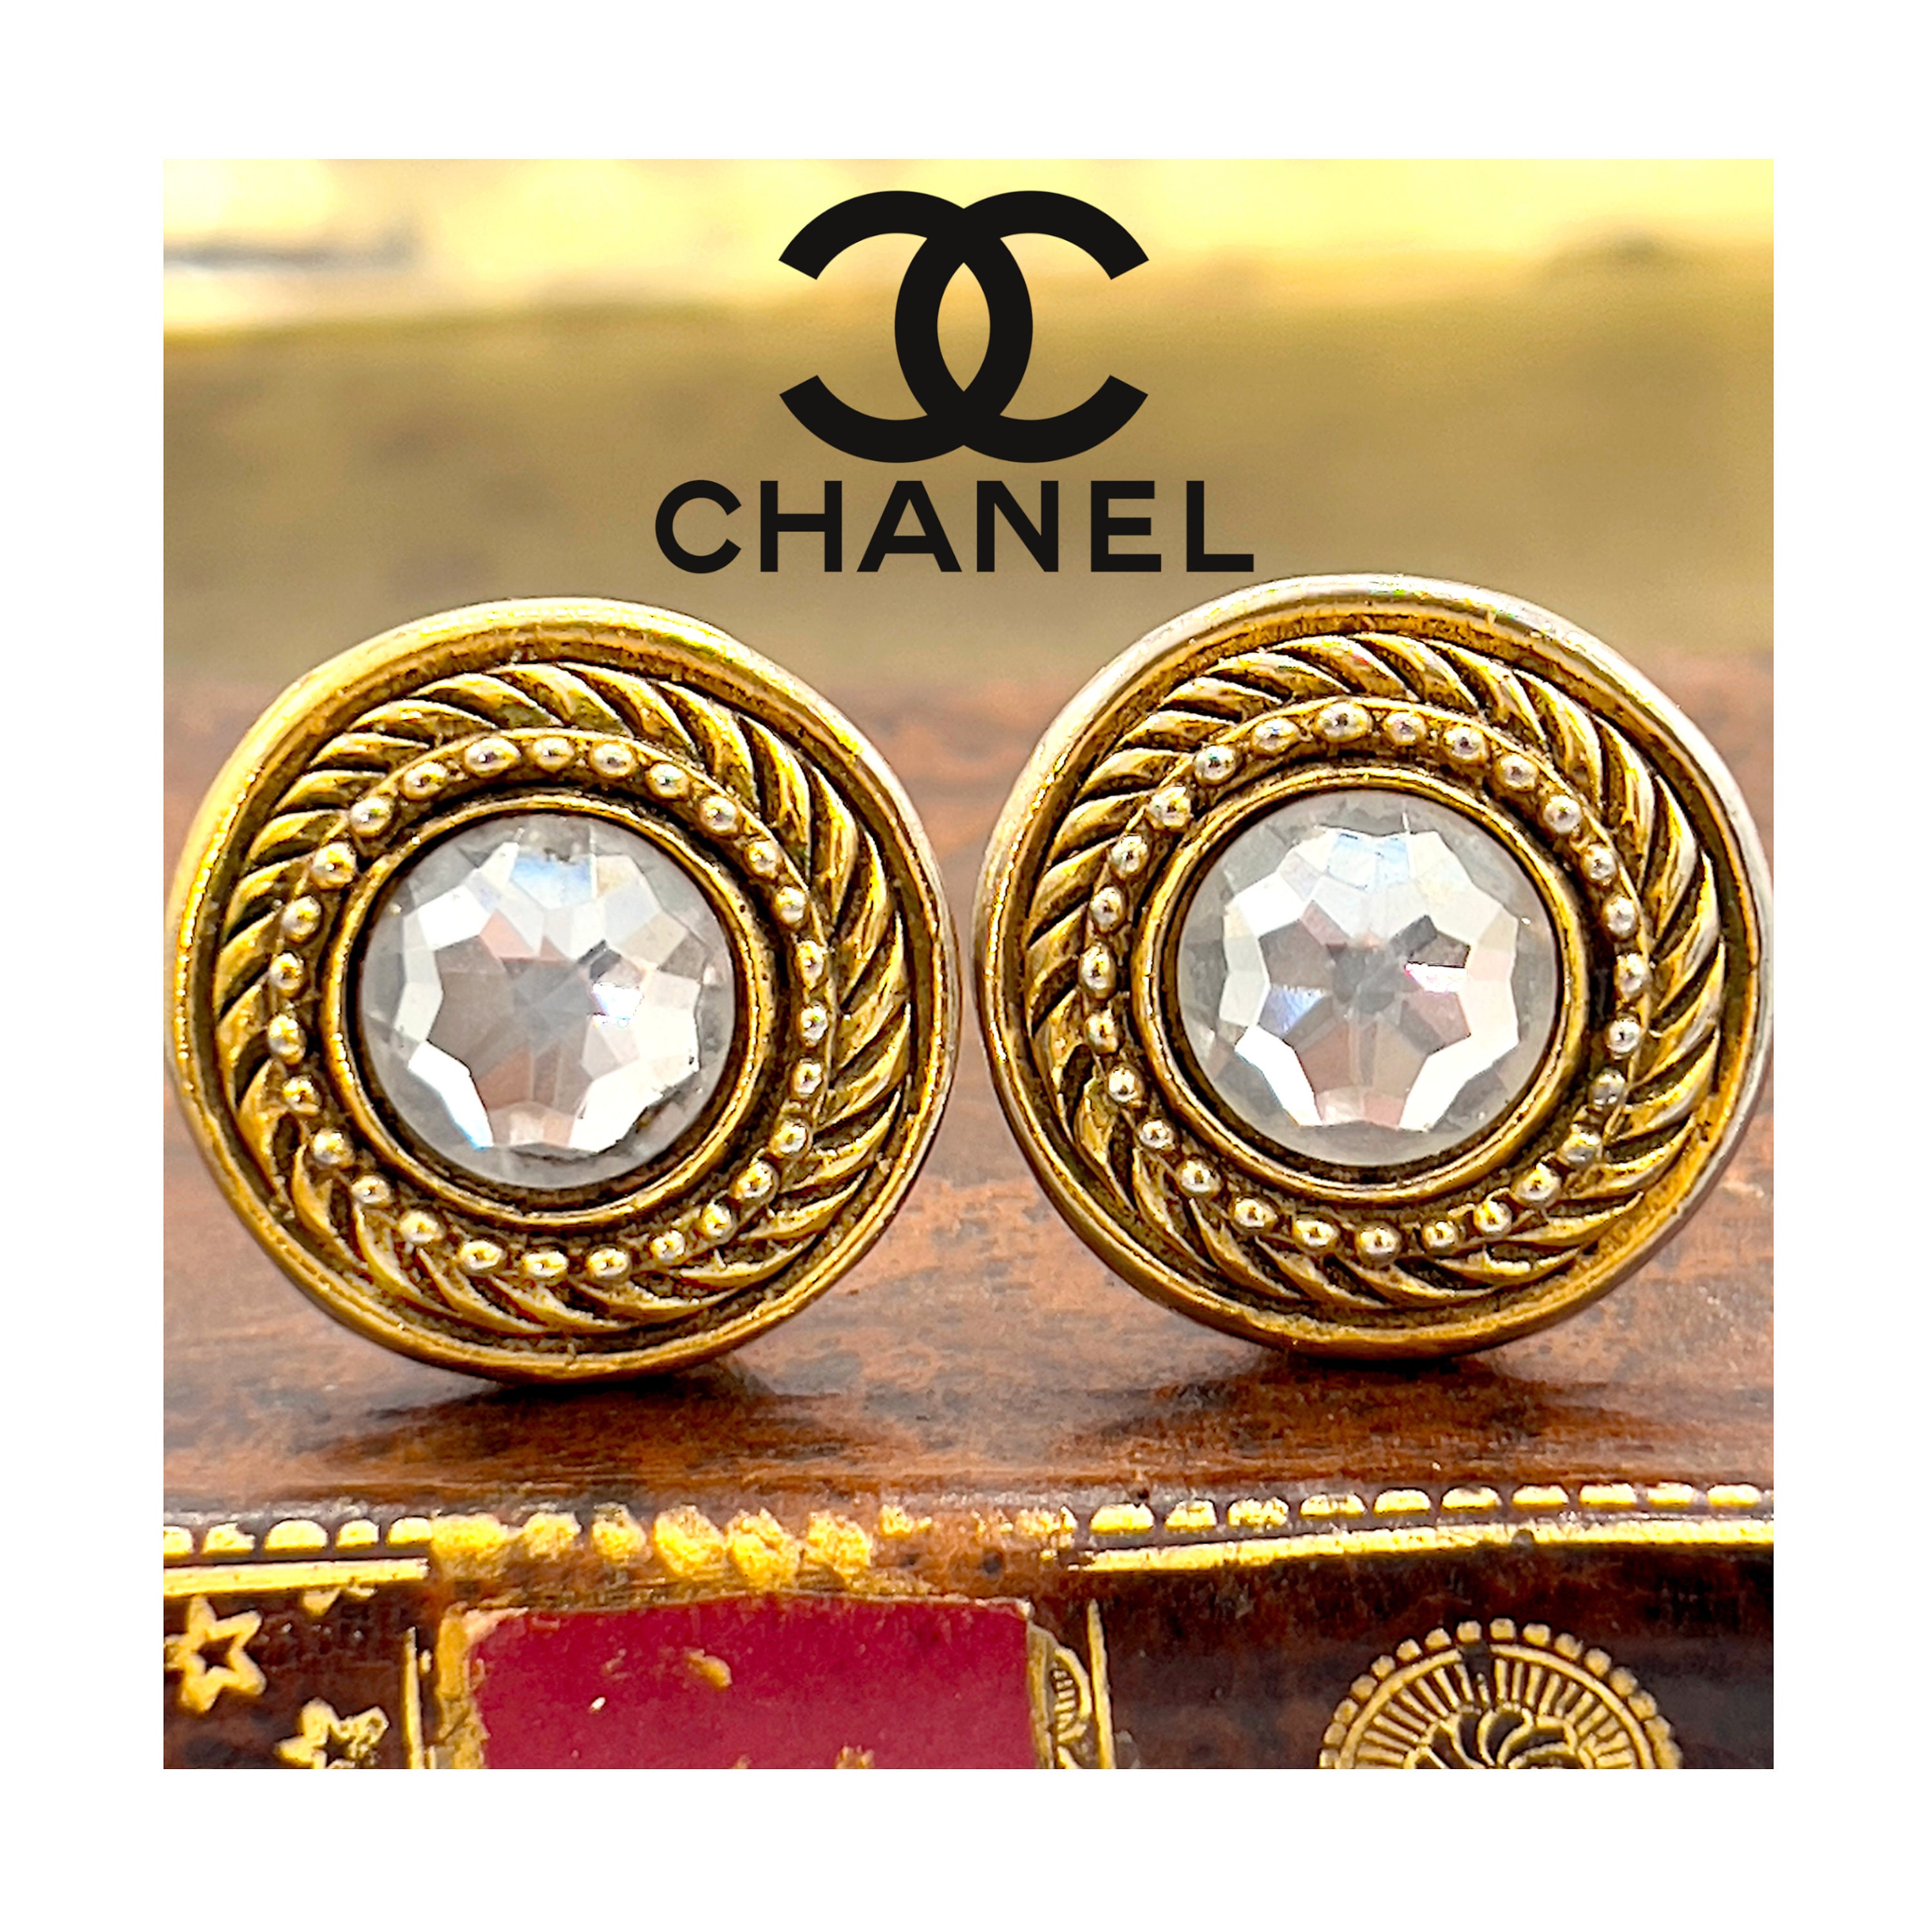 Buy Metal Chanel Logo Online In India -  India